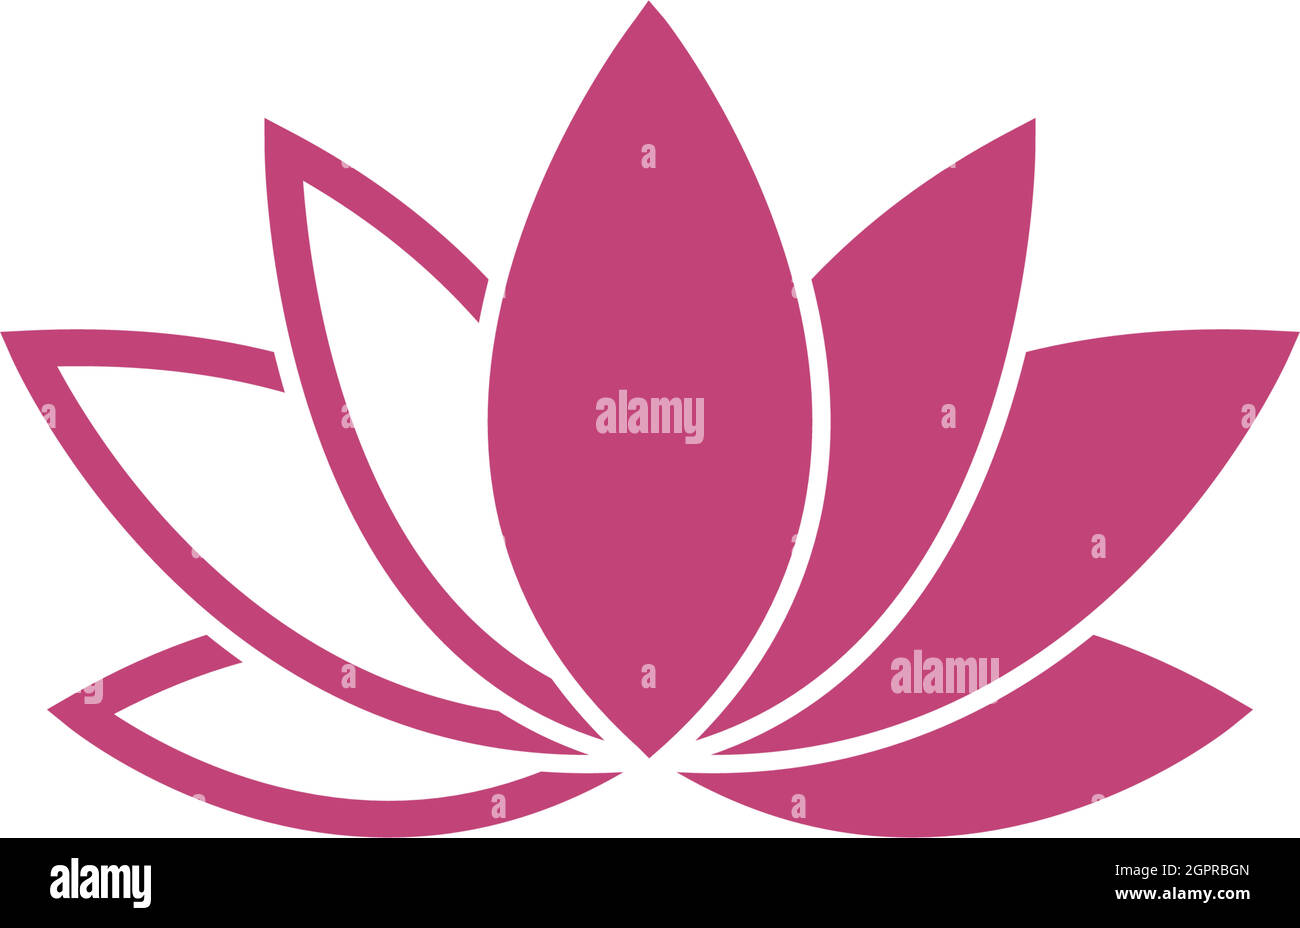 Beauty Lotus flowers logo icon design template Stock Vector